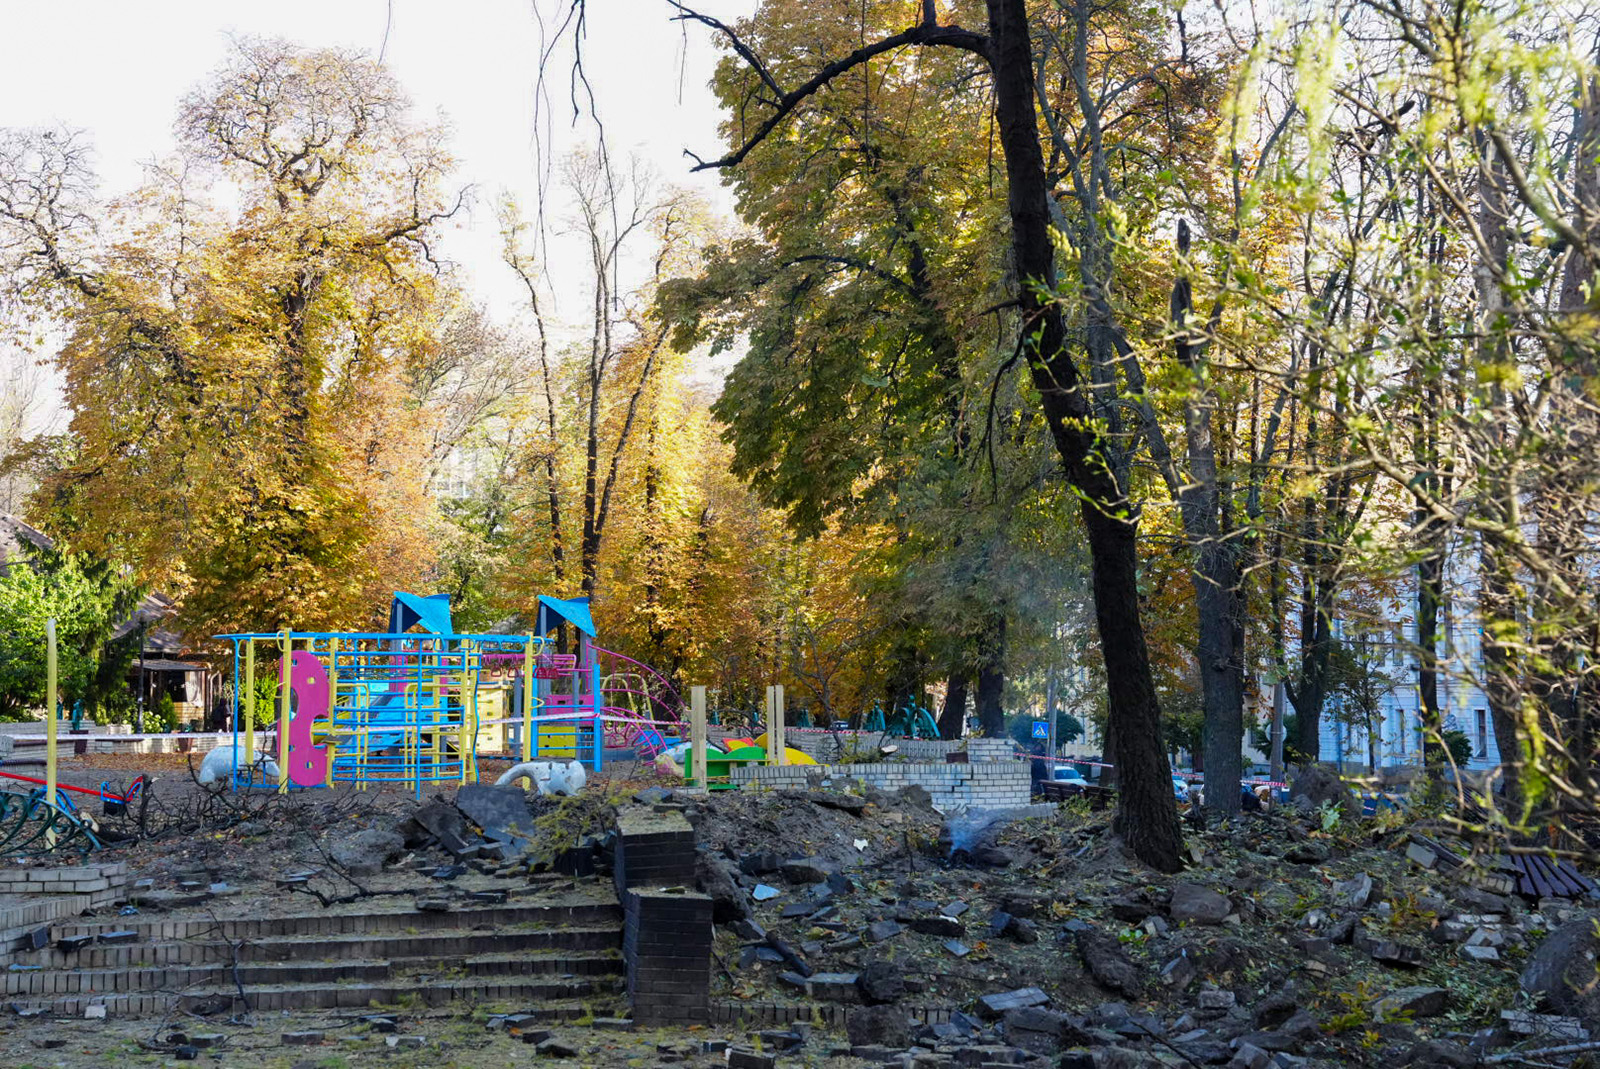 Children’s playground hit in Kyiv attack, Ukrainian official says